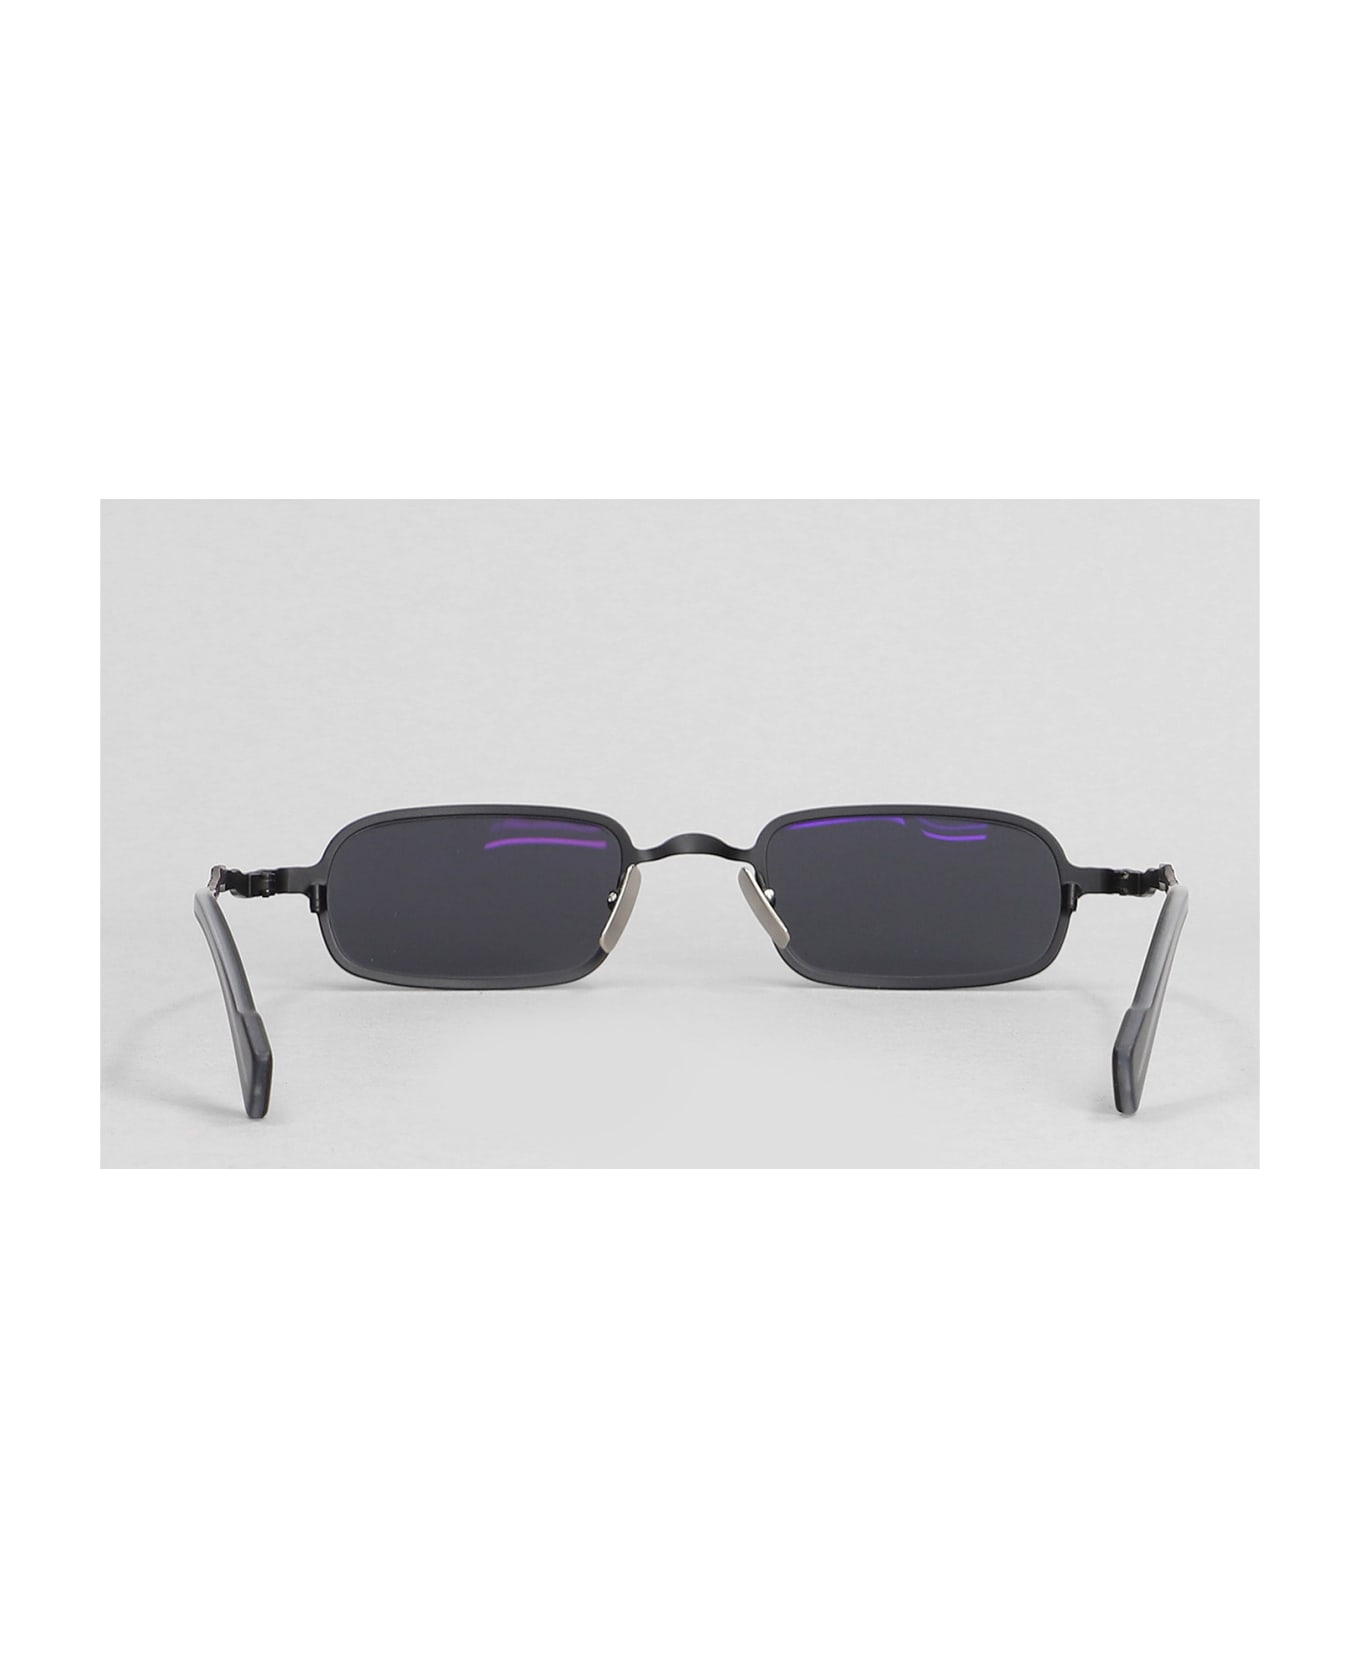 Kuboraum Z18 Sunglasses In Black Metal Alloy - black アイウェア